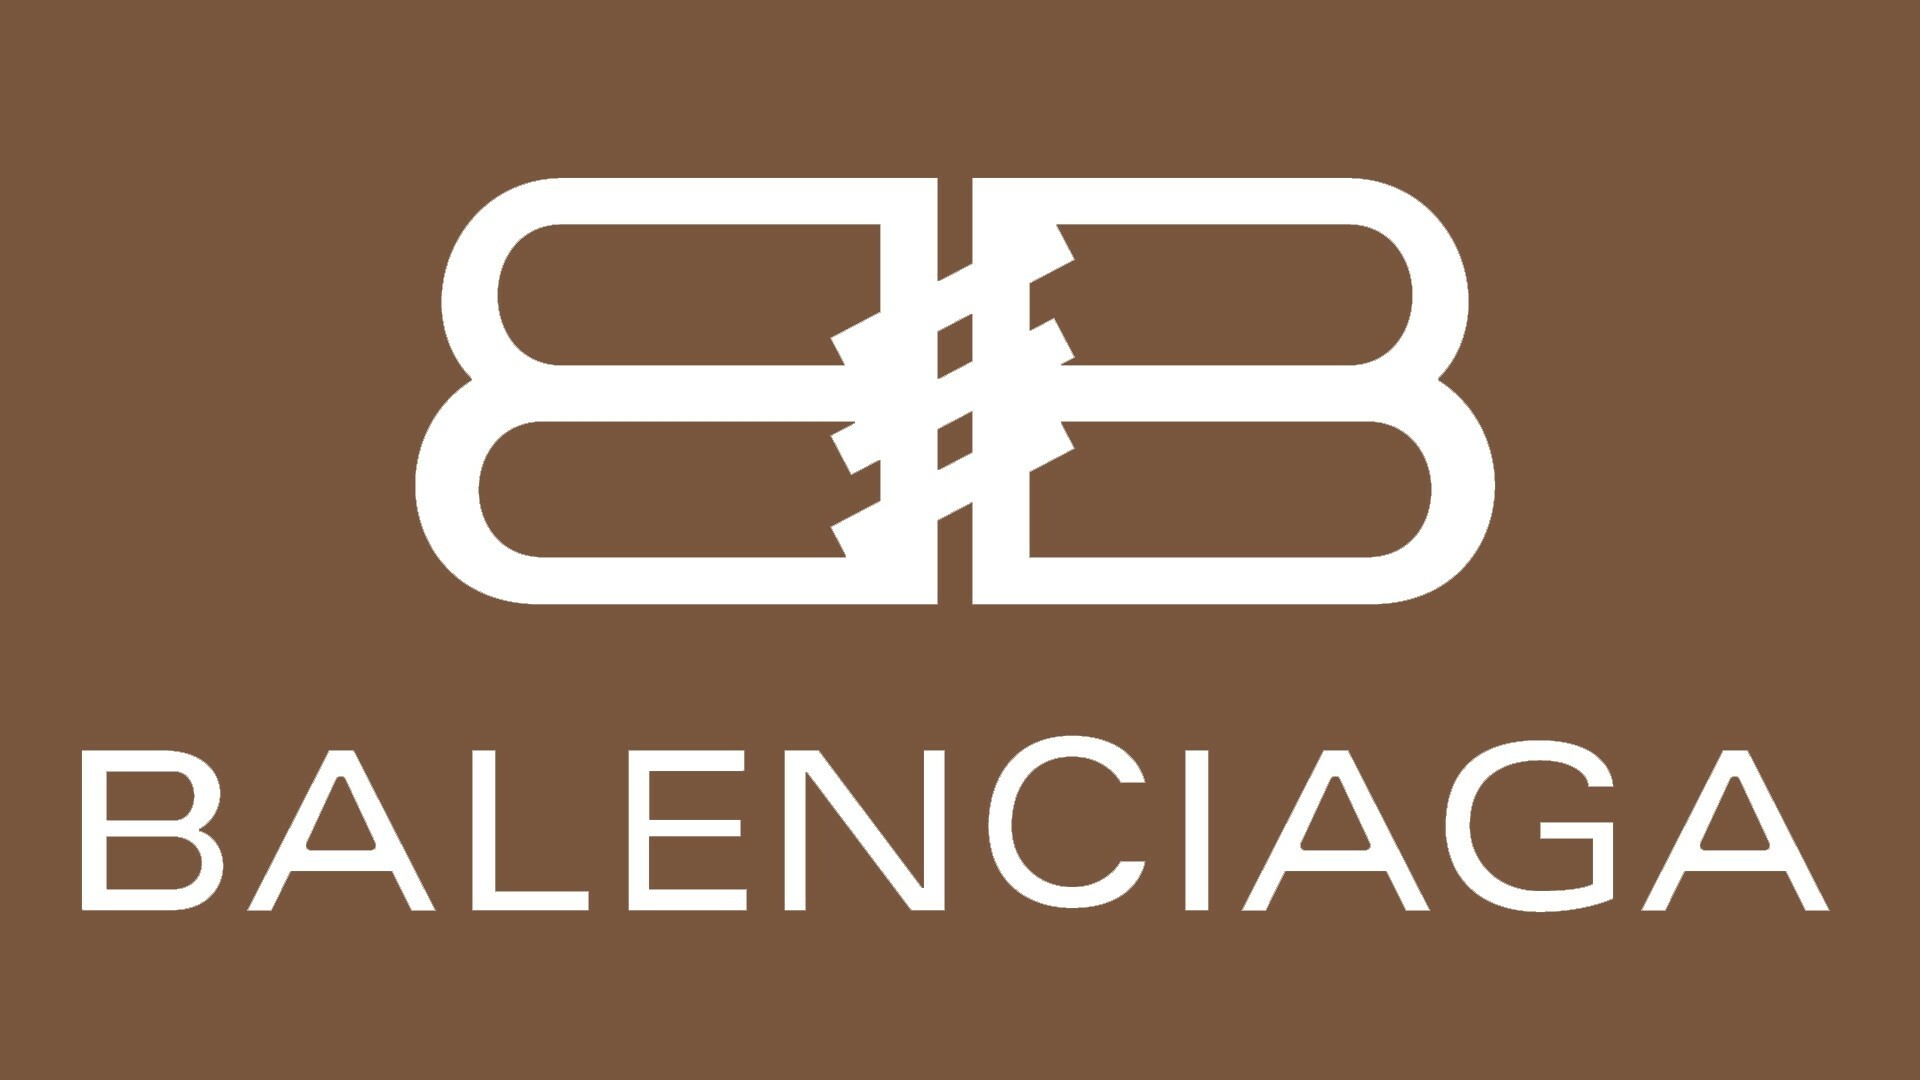 Balenciaga: Created in 1917, The eponymous label of Spanish designer. 1920x1080 Full HD Wallpaper.